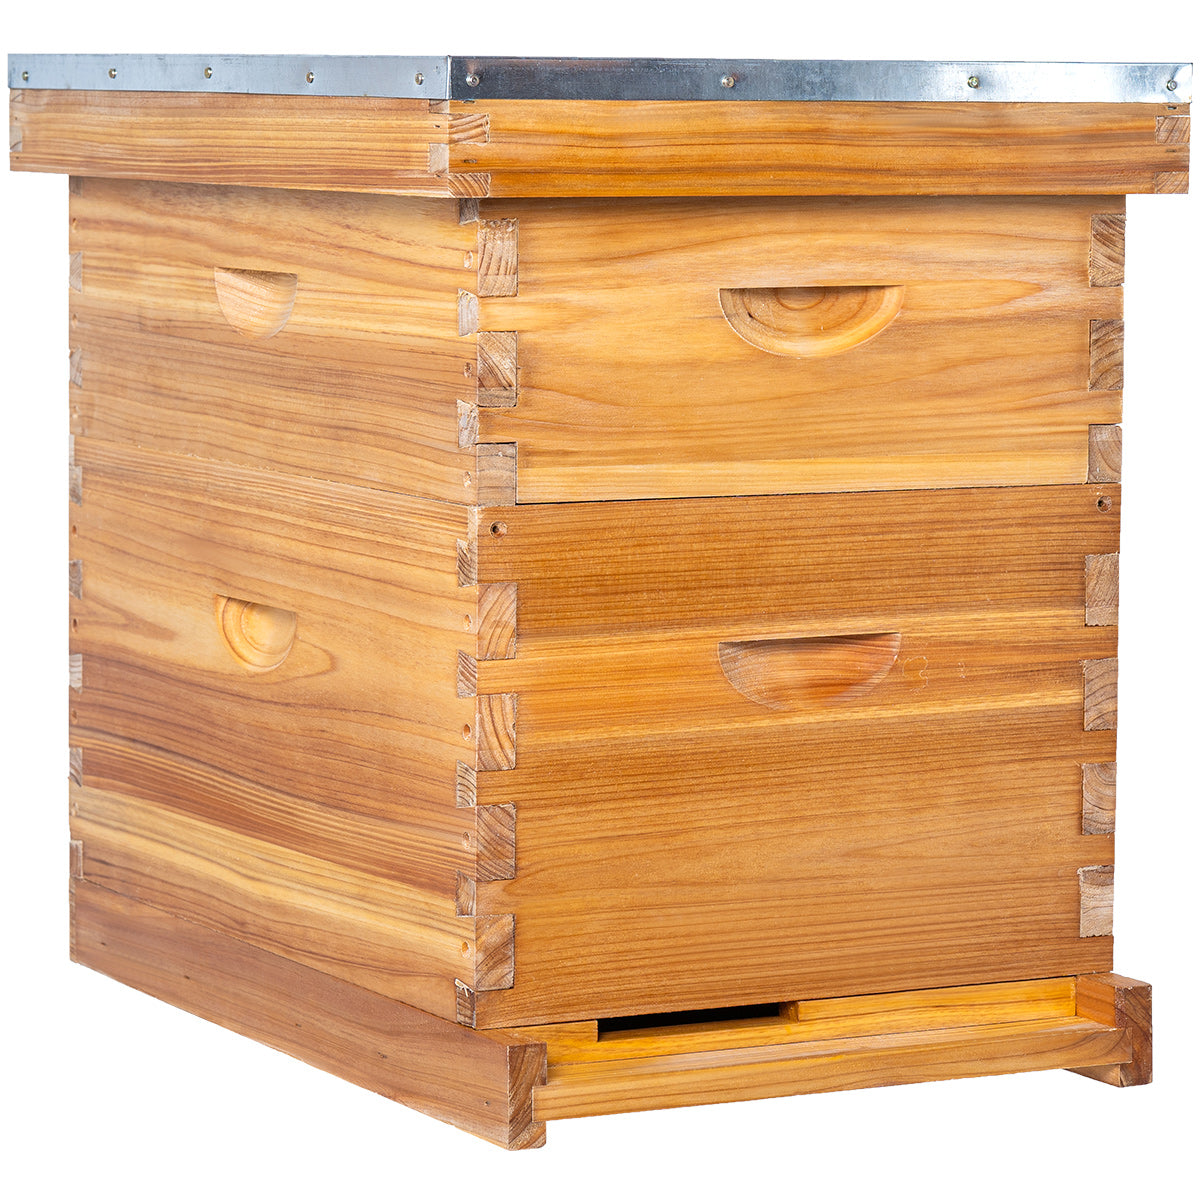 8-Frame Beehive 2 Layer: 1 deep bee box,1 super box 